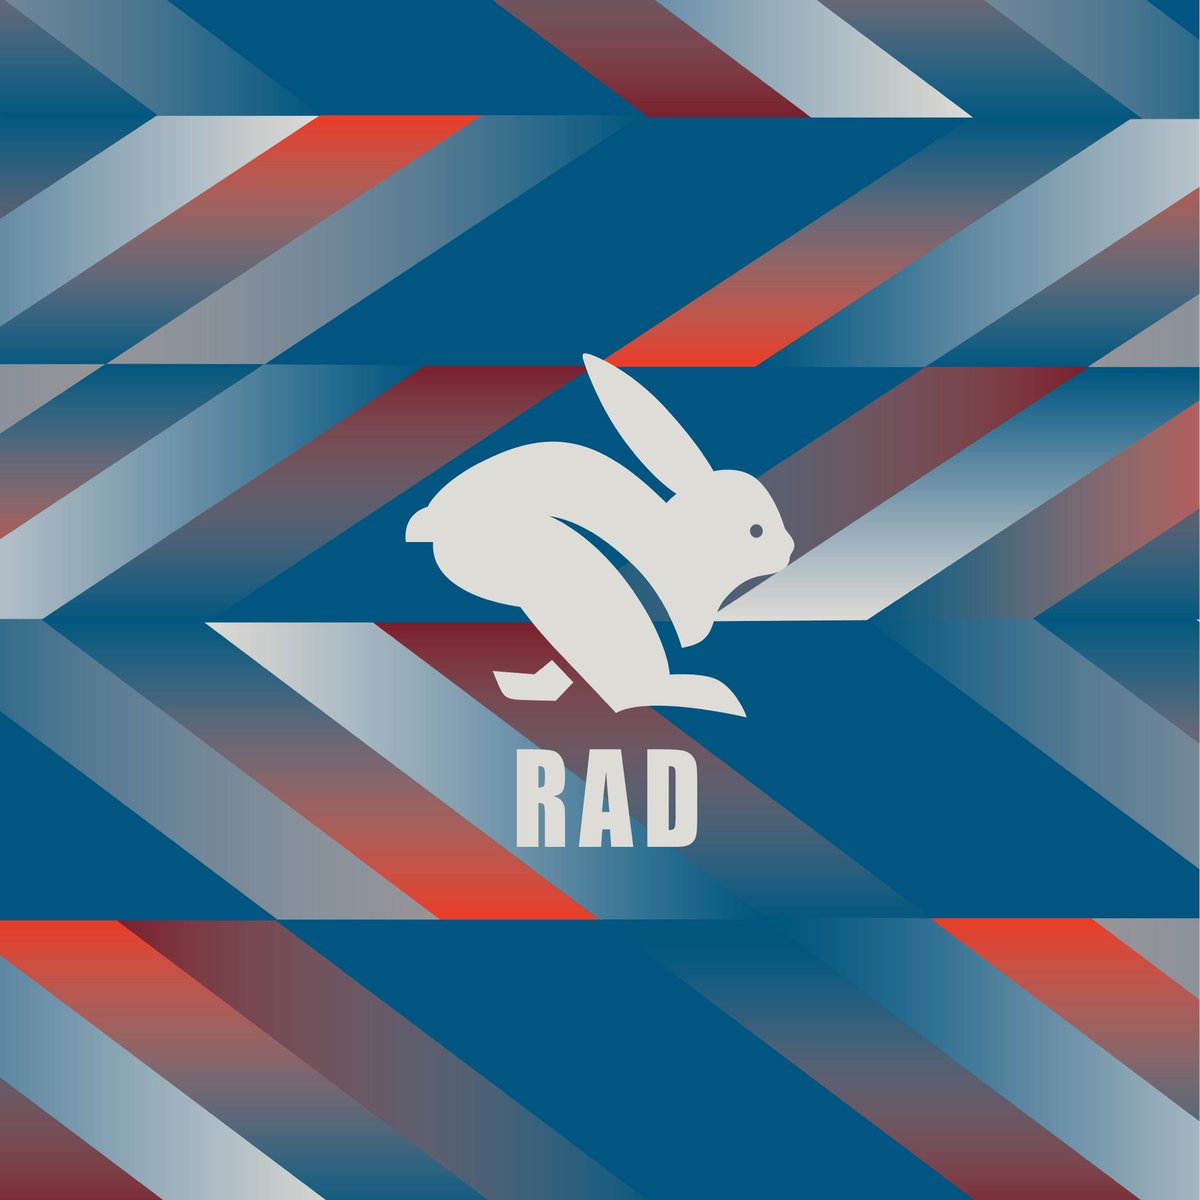 So excited to be apart of the RADrabbit team this year 🤗
@runinrabbit #RADrabbit